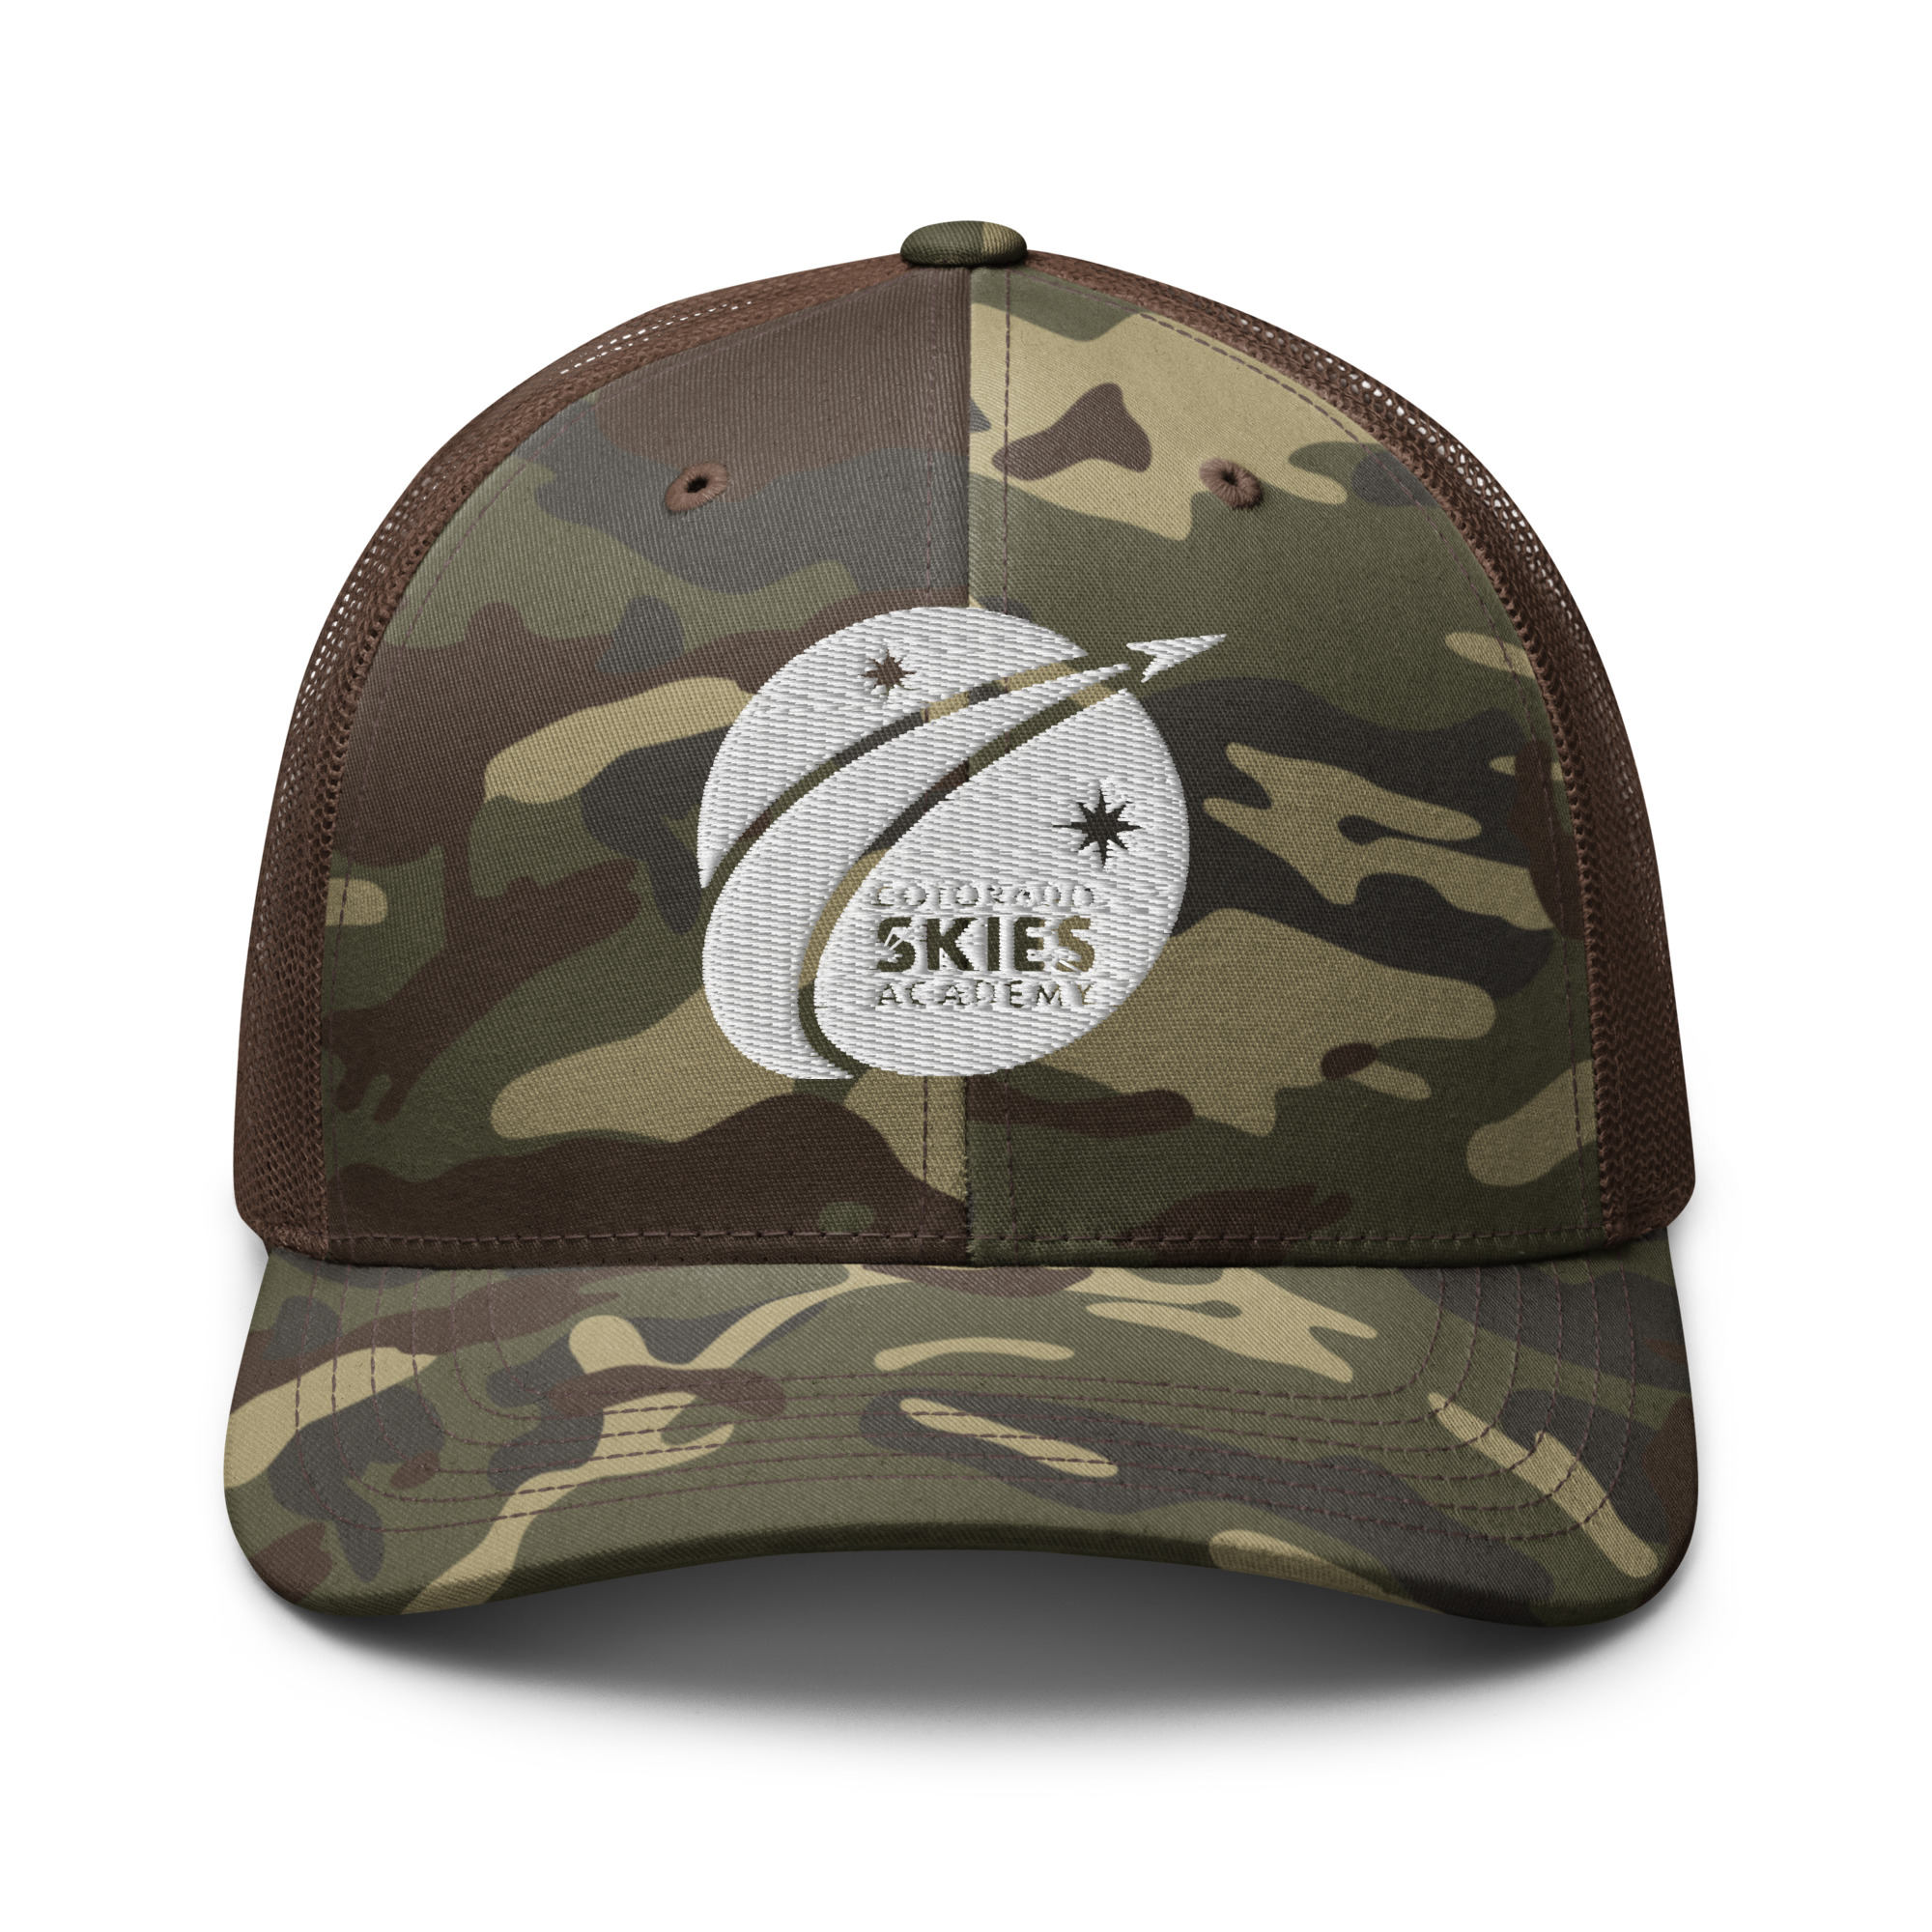 Camouflage trucker hat - Colorado SKIES Academy